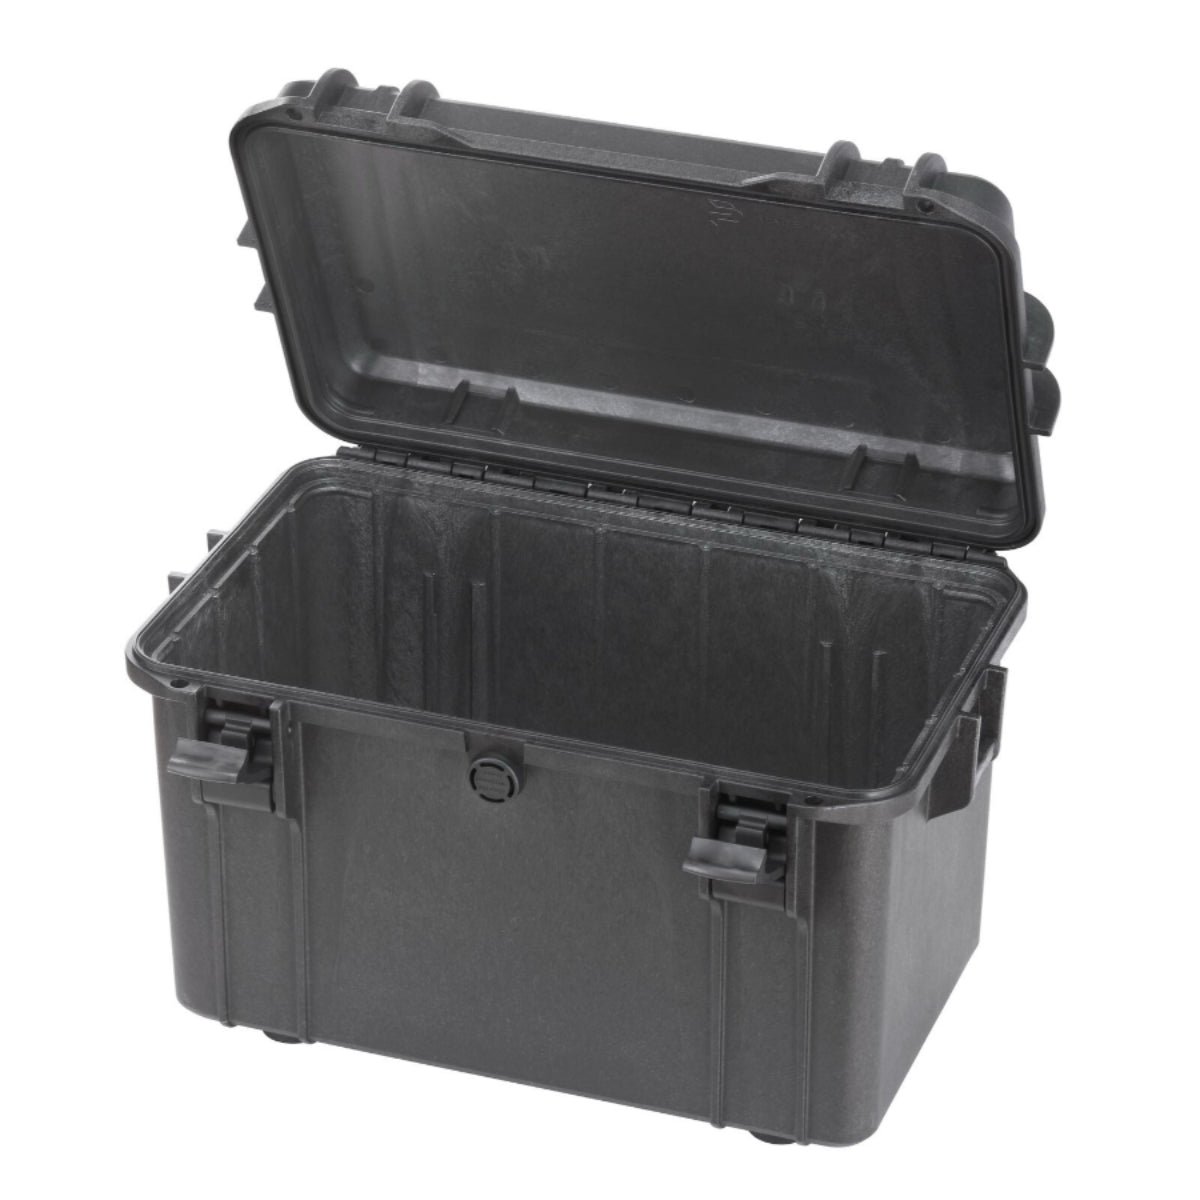 SP PRO 400 Black Carry Case, Empty w/ Convoluted Foam in Lid, ID: L400xW230xH260mm